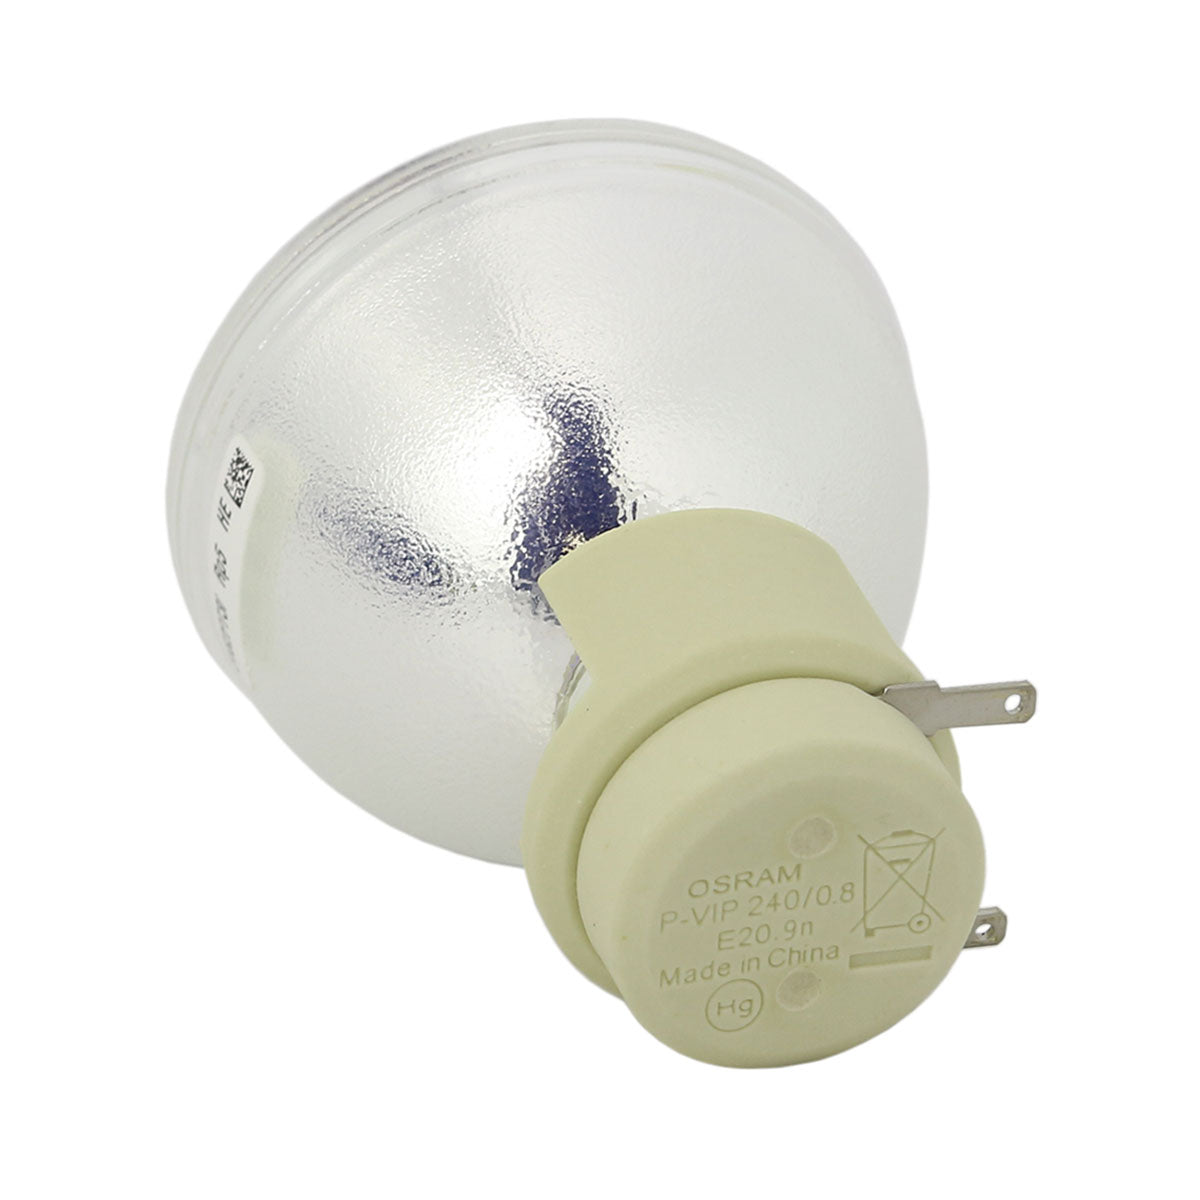 Viewsonic RLC-126 Osram Projector Bare Lamp